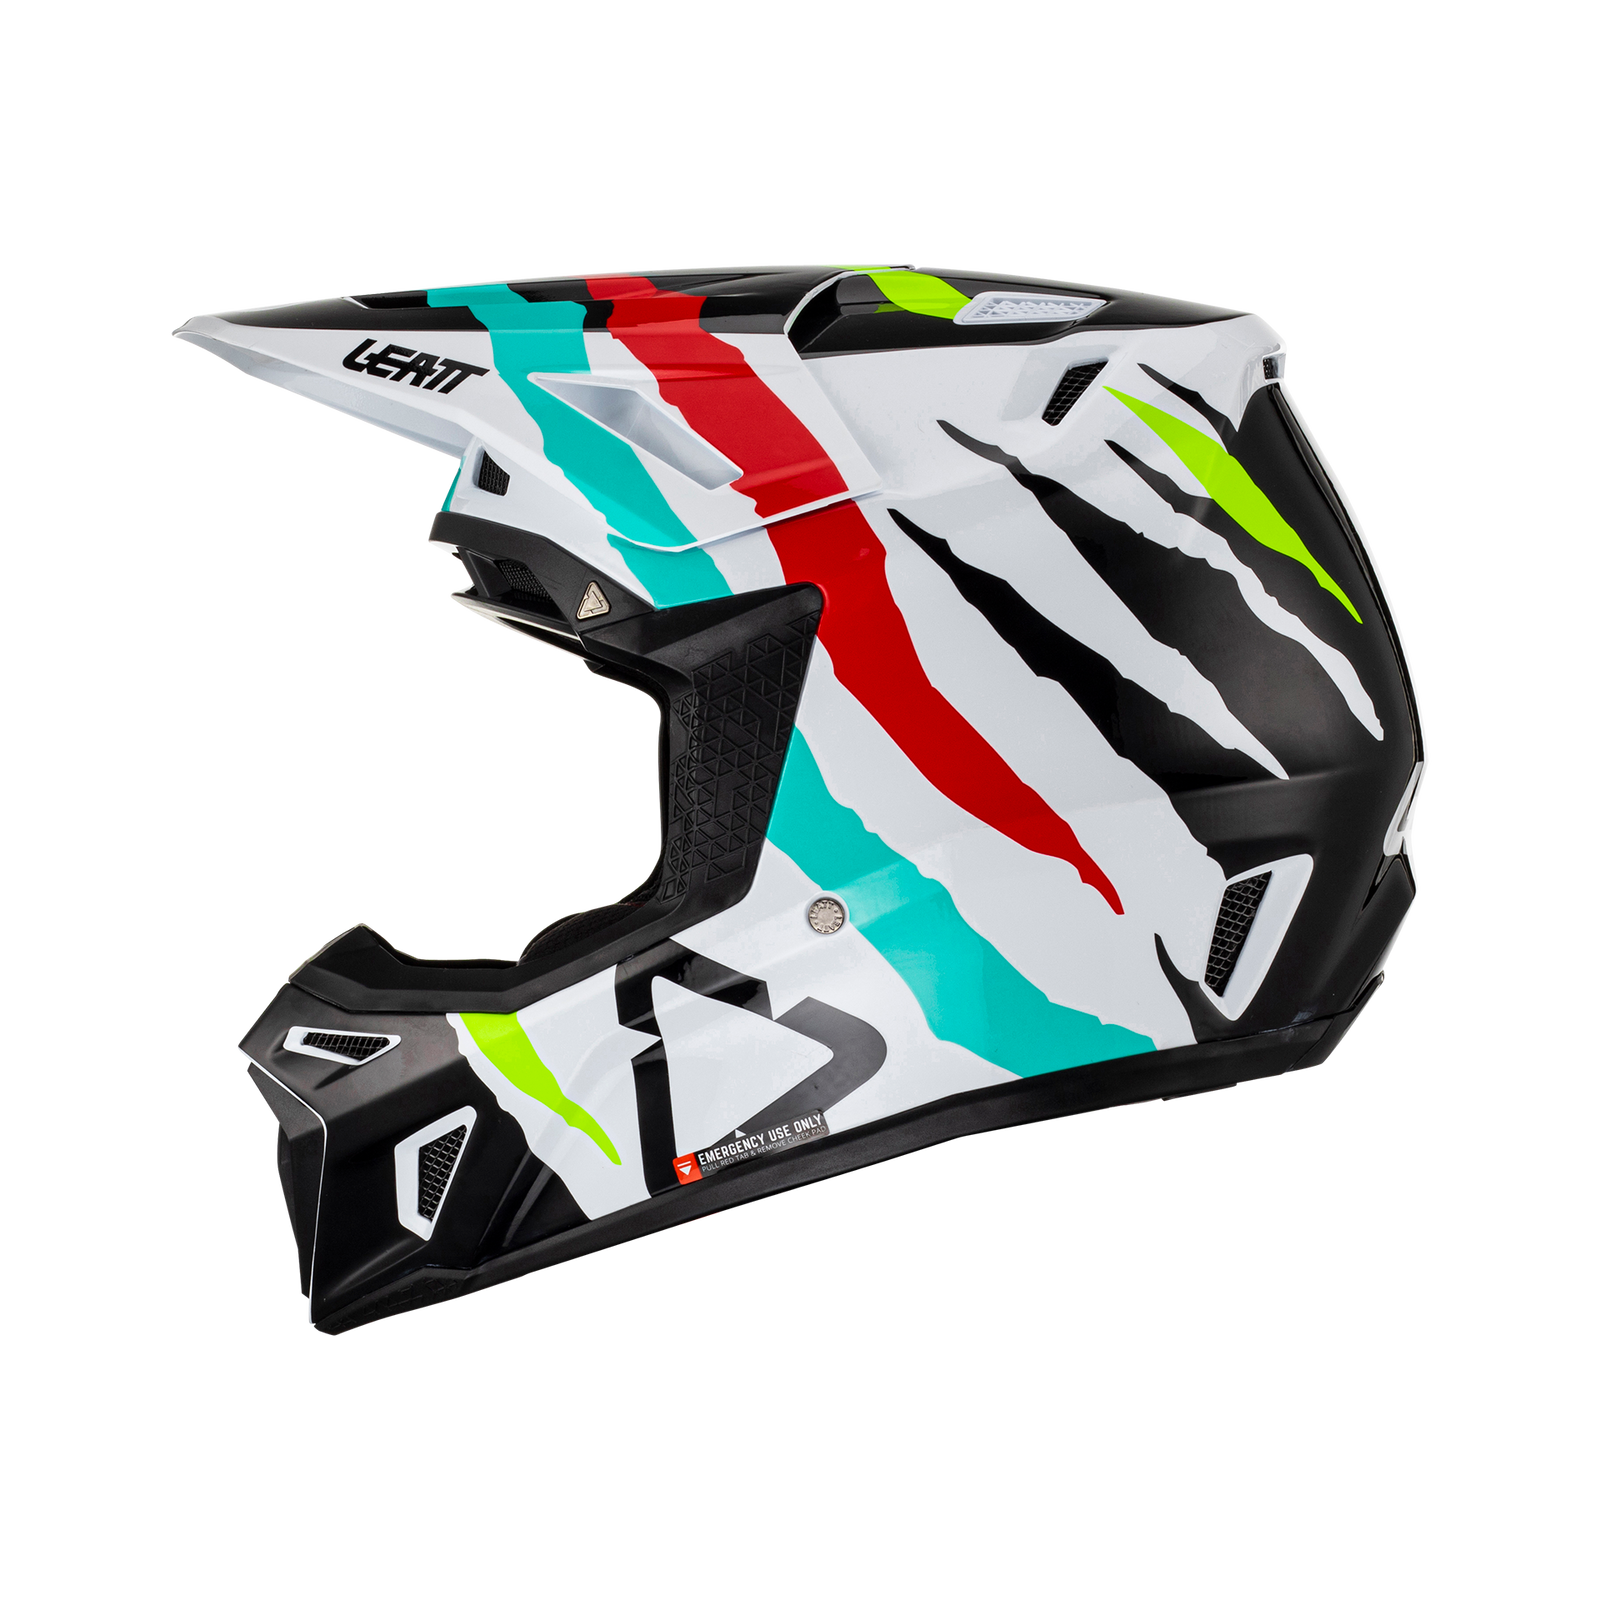 Leatt Helmet Kit Moto 8.5 V23 Tiger